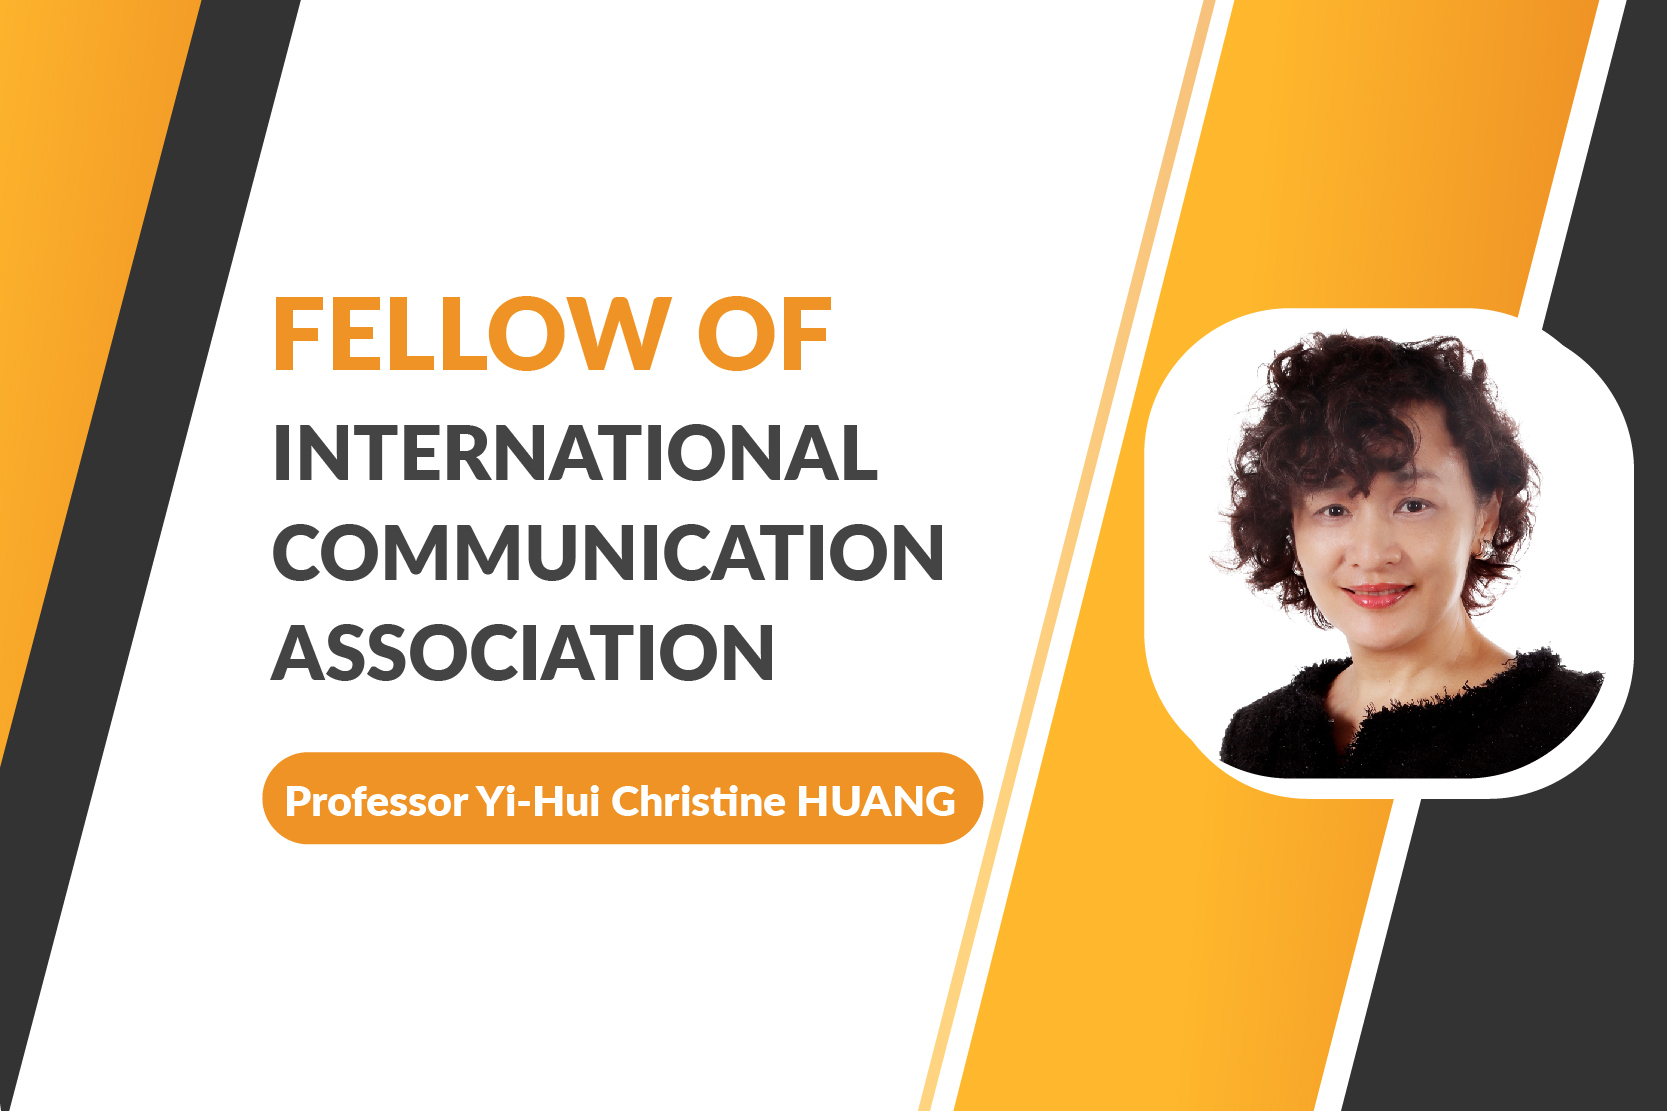 Professor Yi-hui Christine Huang Elected Fellow of the International Communication Association